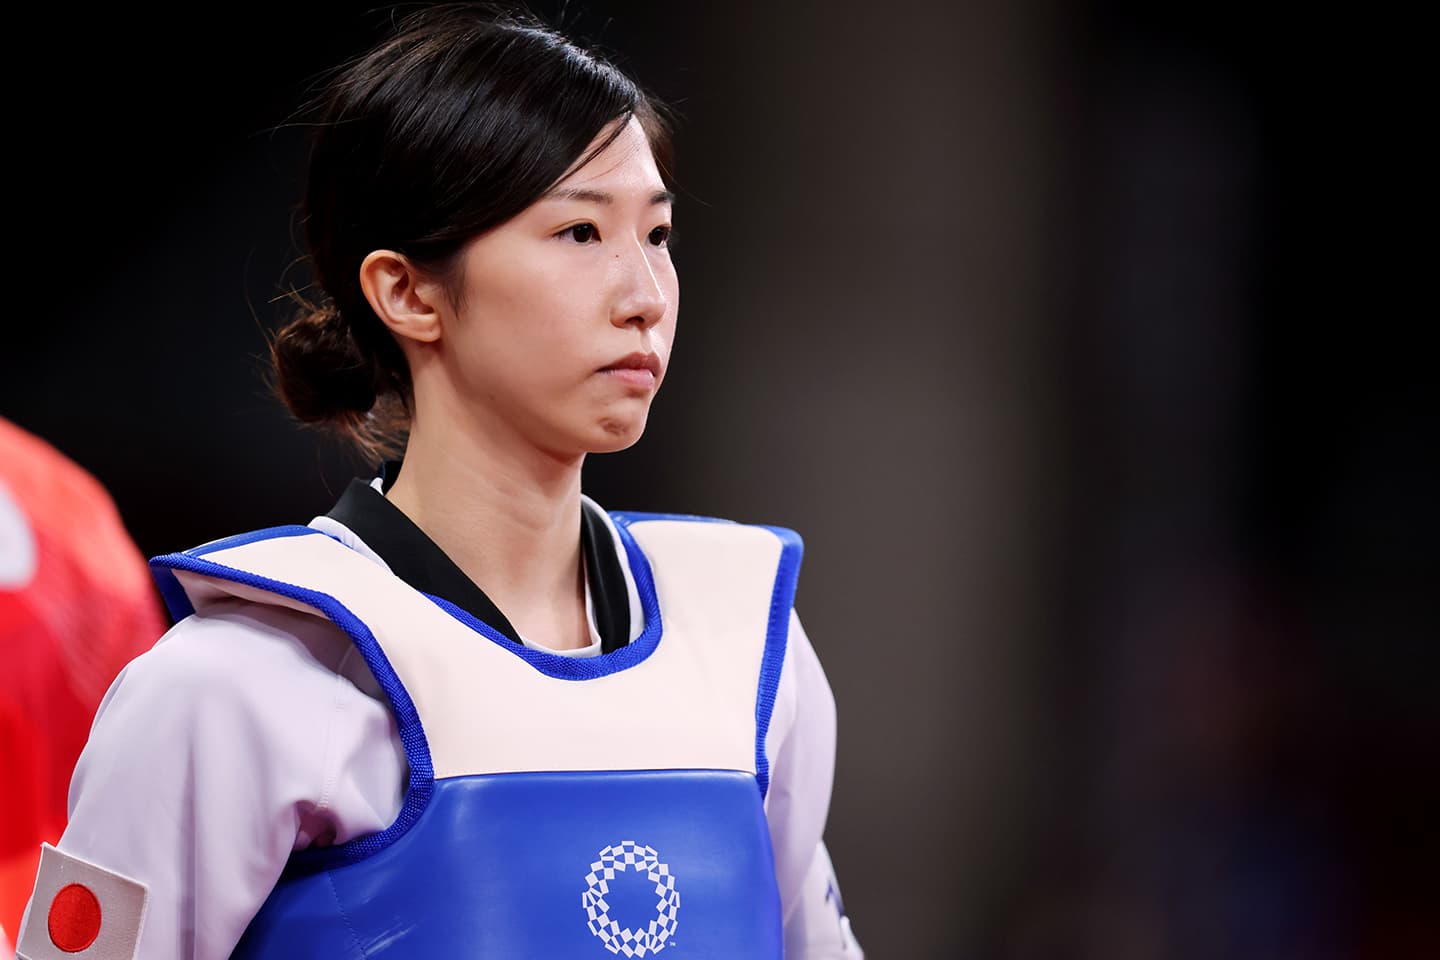 東京2020大会テコンドー女子-49kg級準々決勝